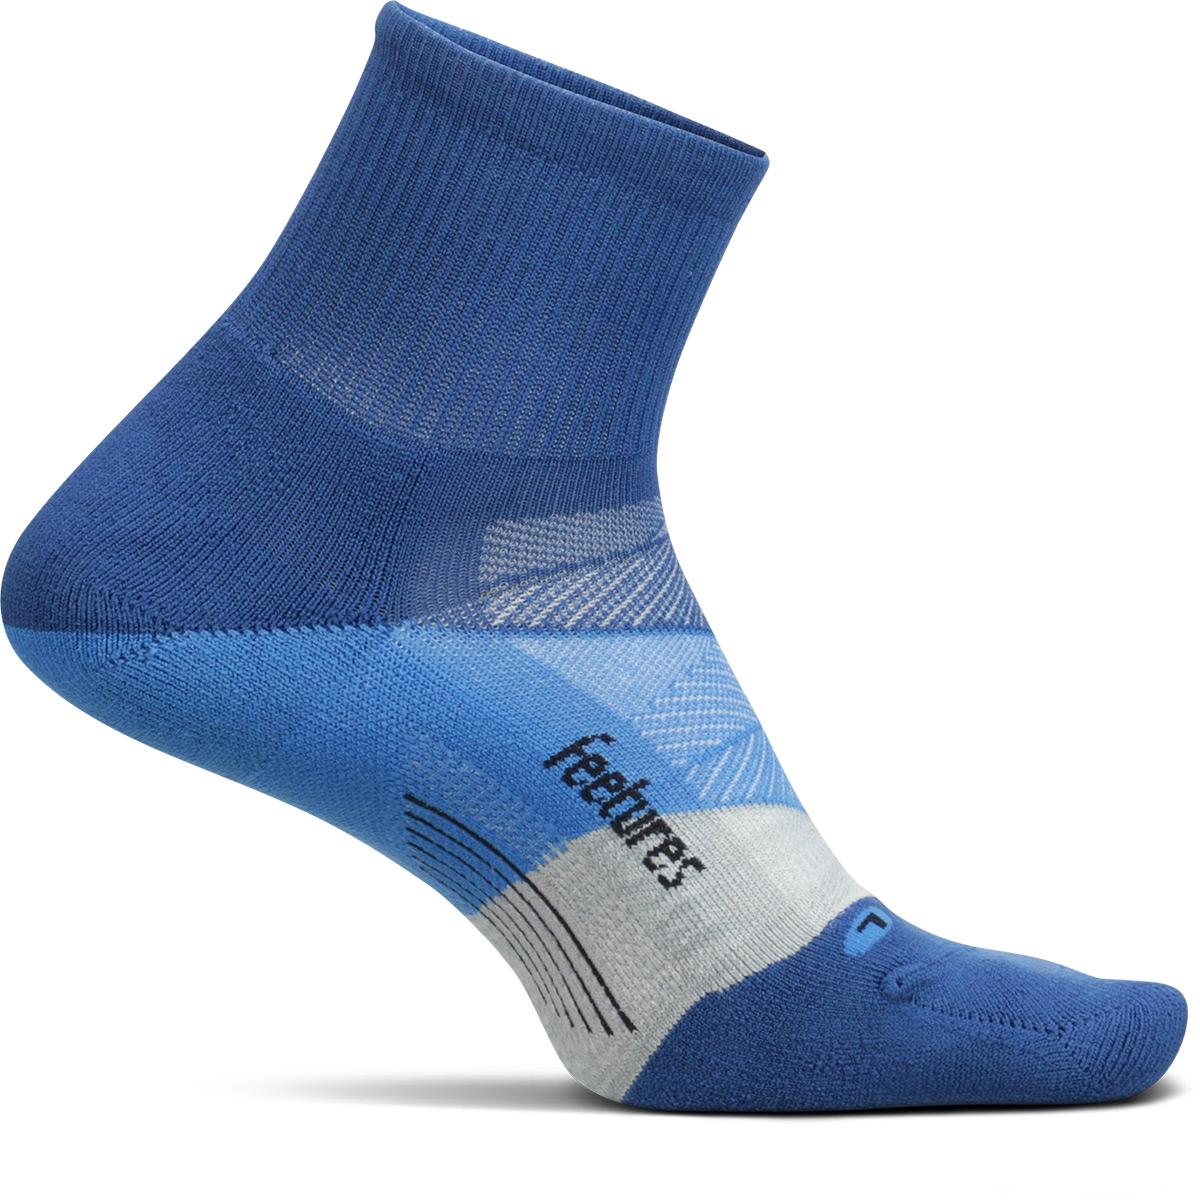 Feetures Elite Light Cushion Quarter Black 2 Xl - Buckle Up Blue